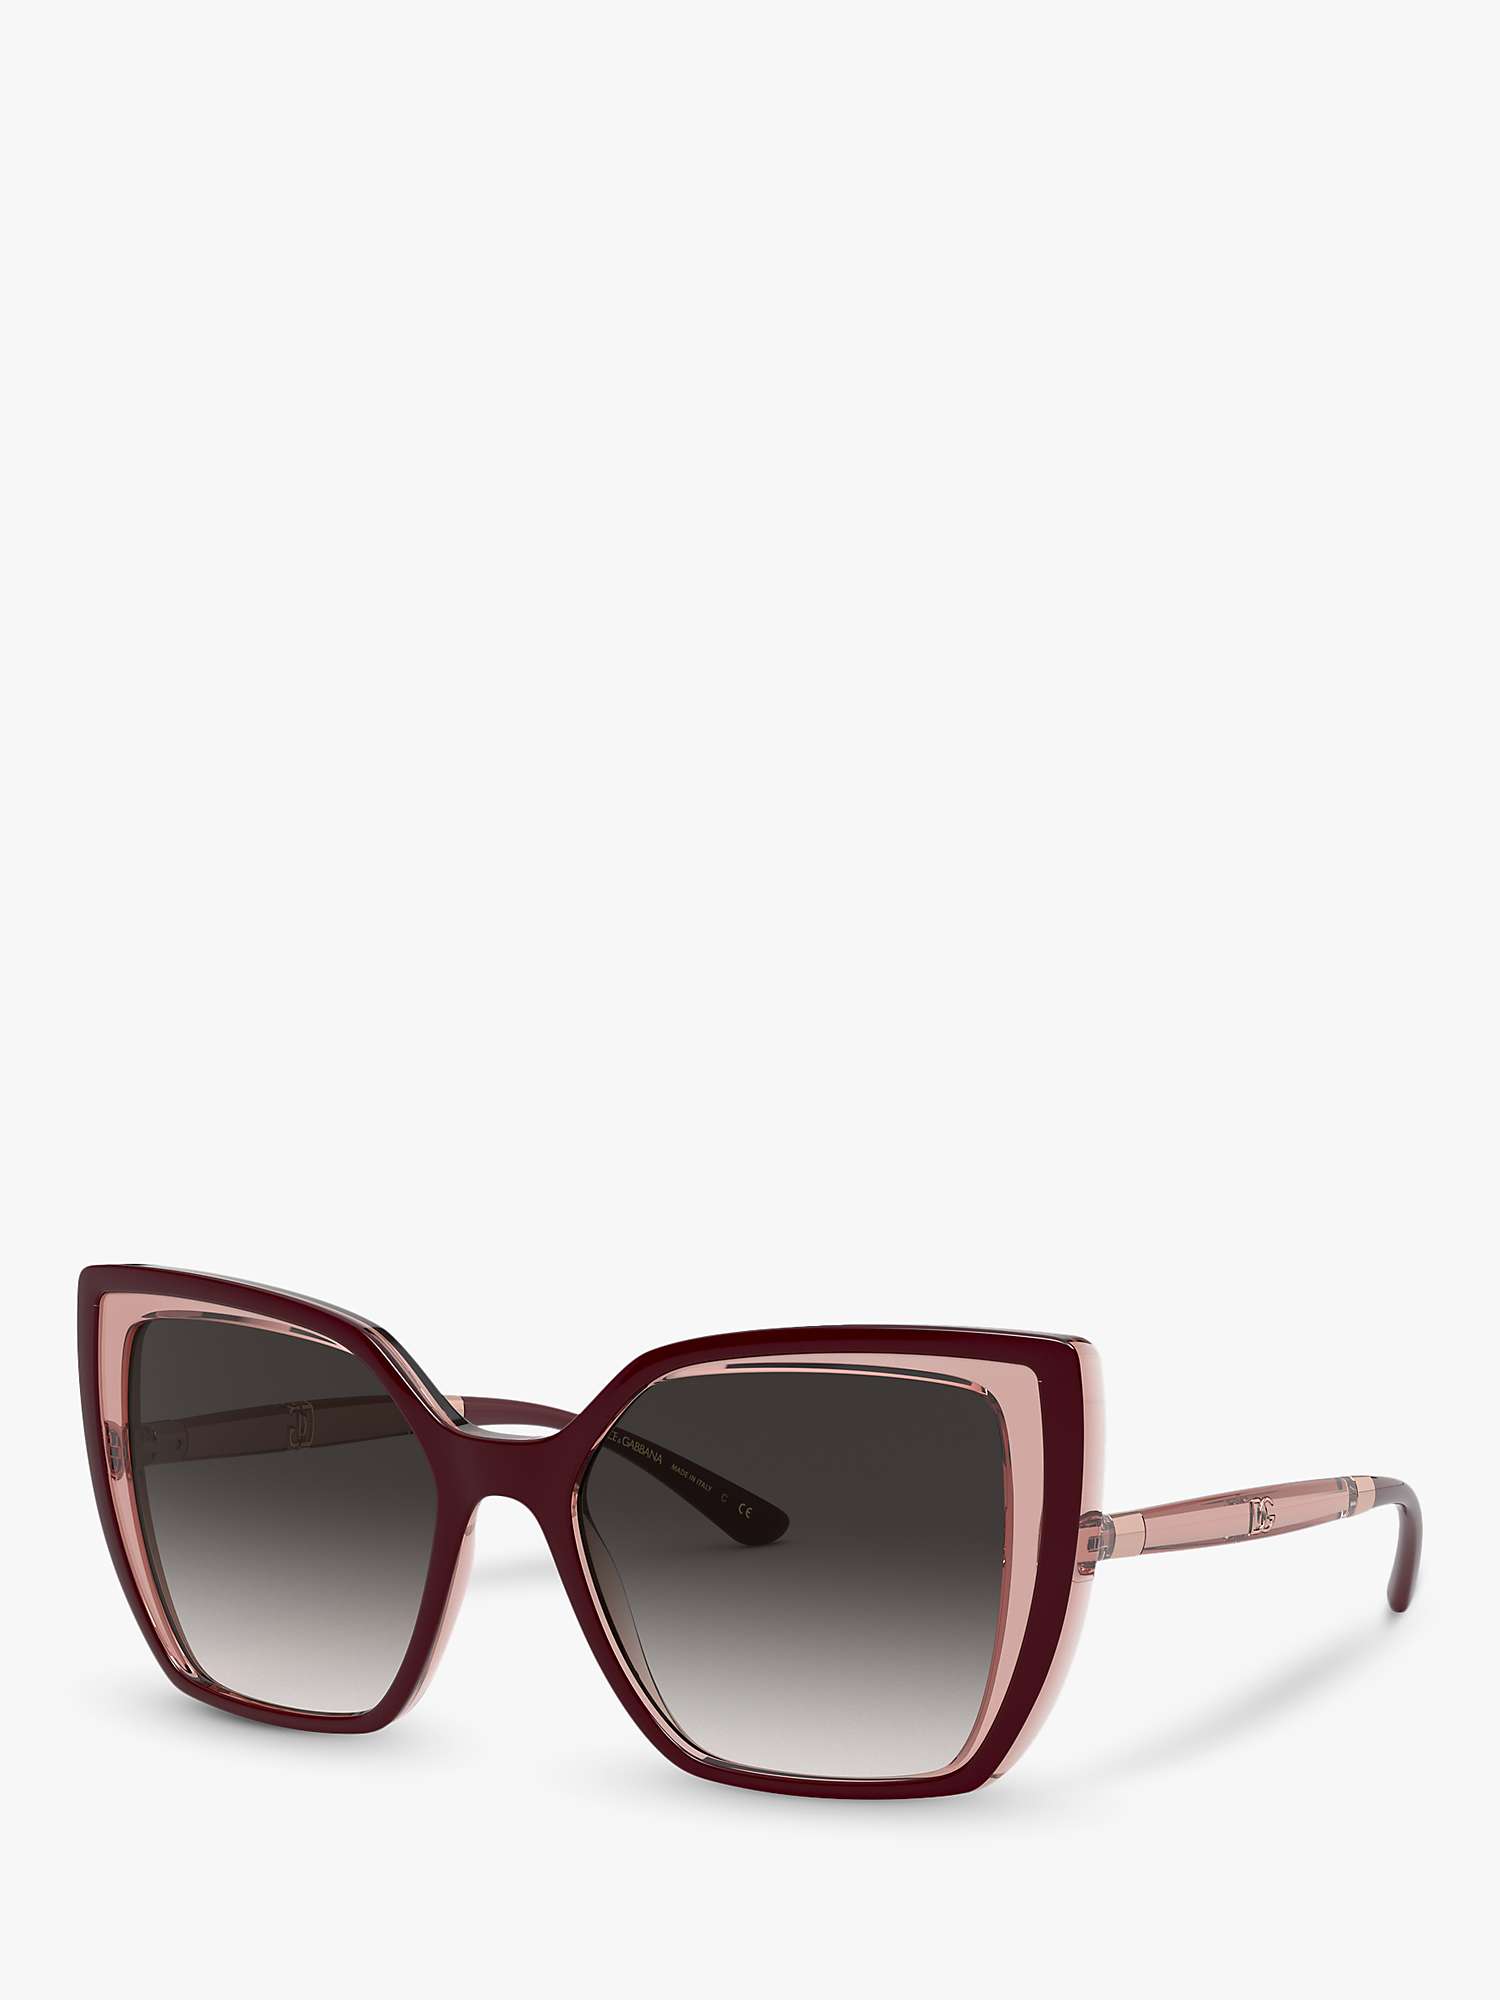 Buy Dolce & Gabbana DG6138 Women's Butterfly Sunglasses Online at johnlewis.com